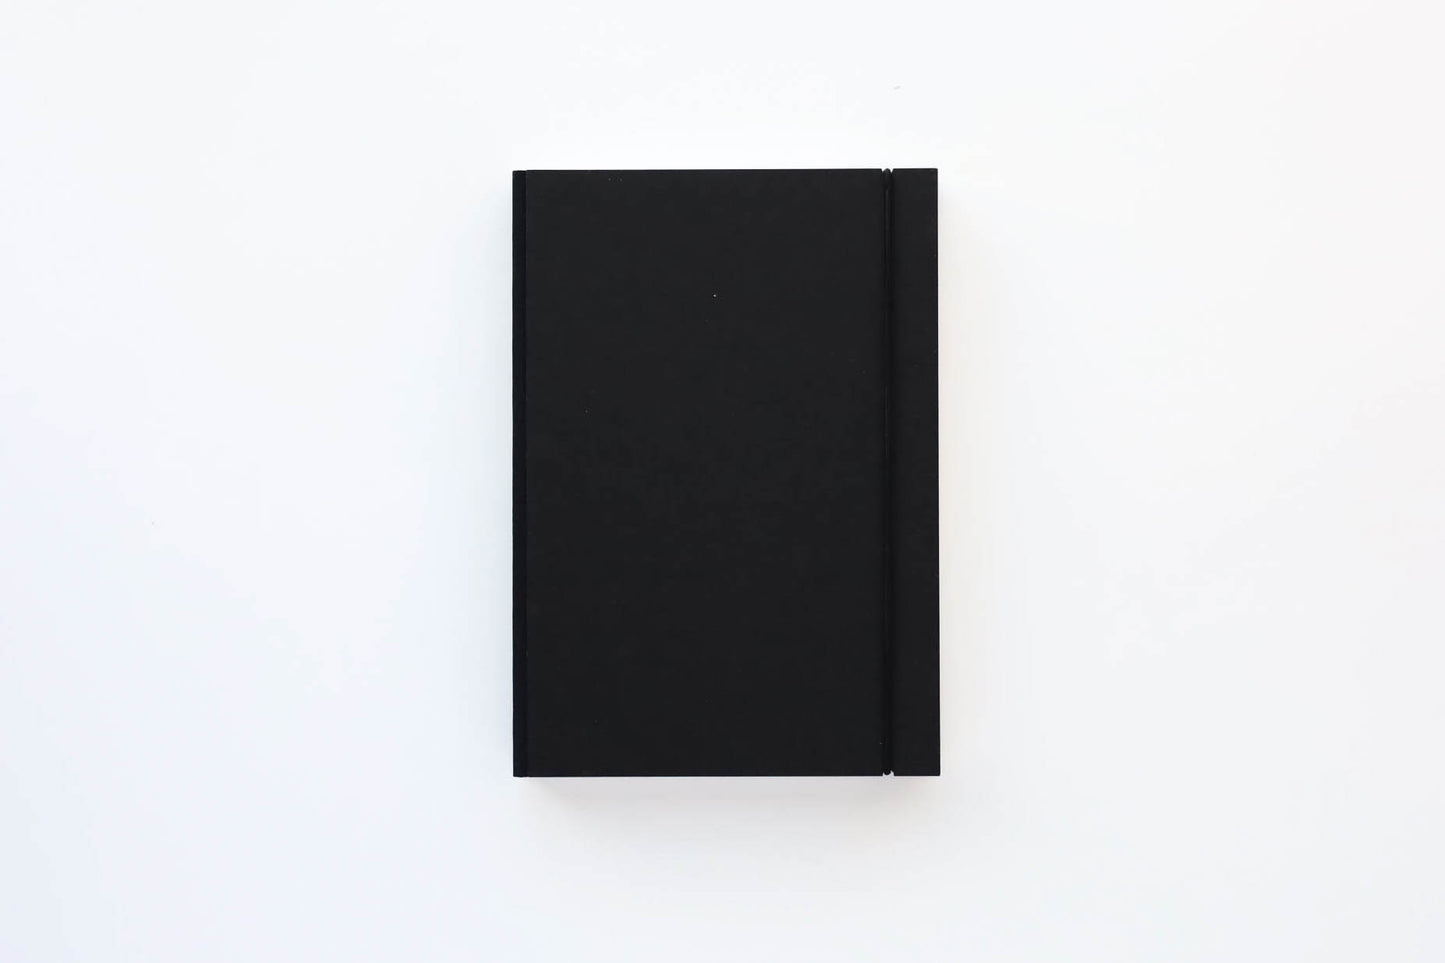 Bindewerk All Black Sketchbooks – Case for Making